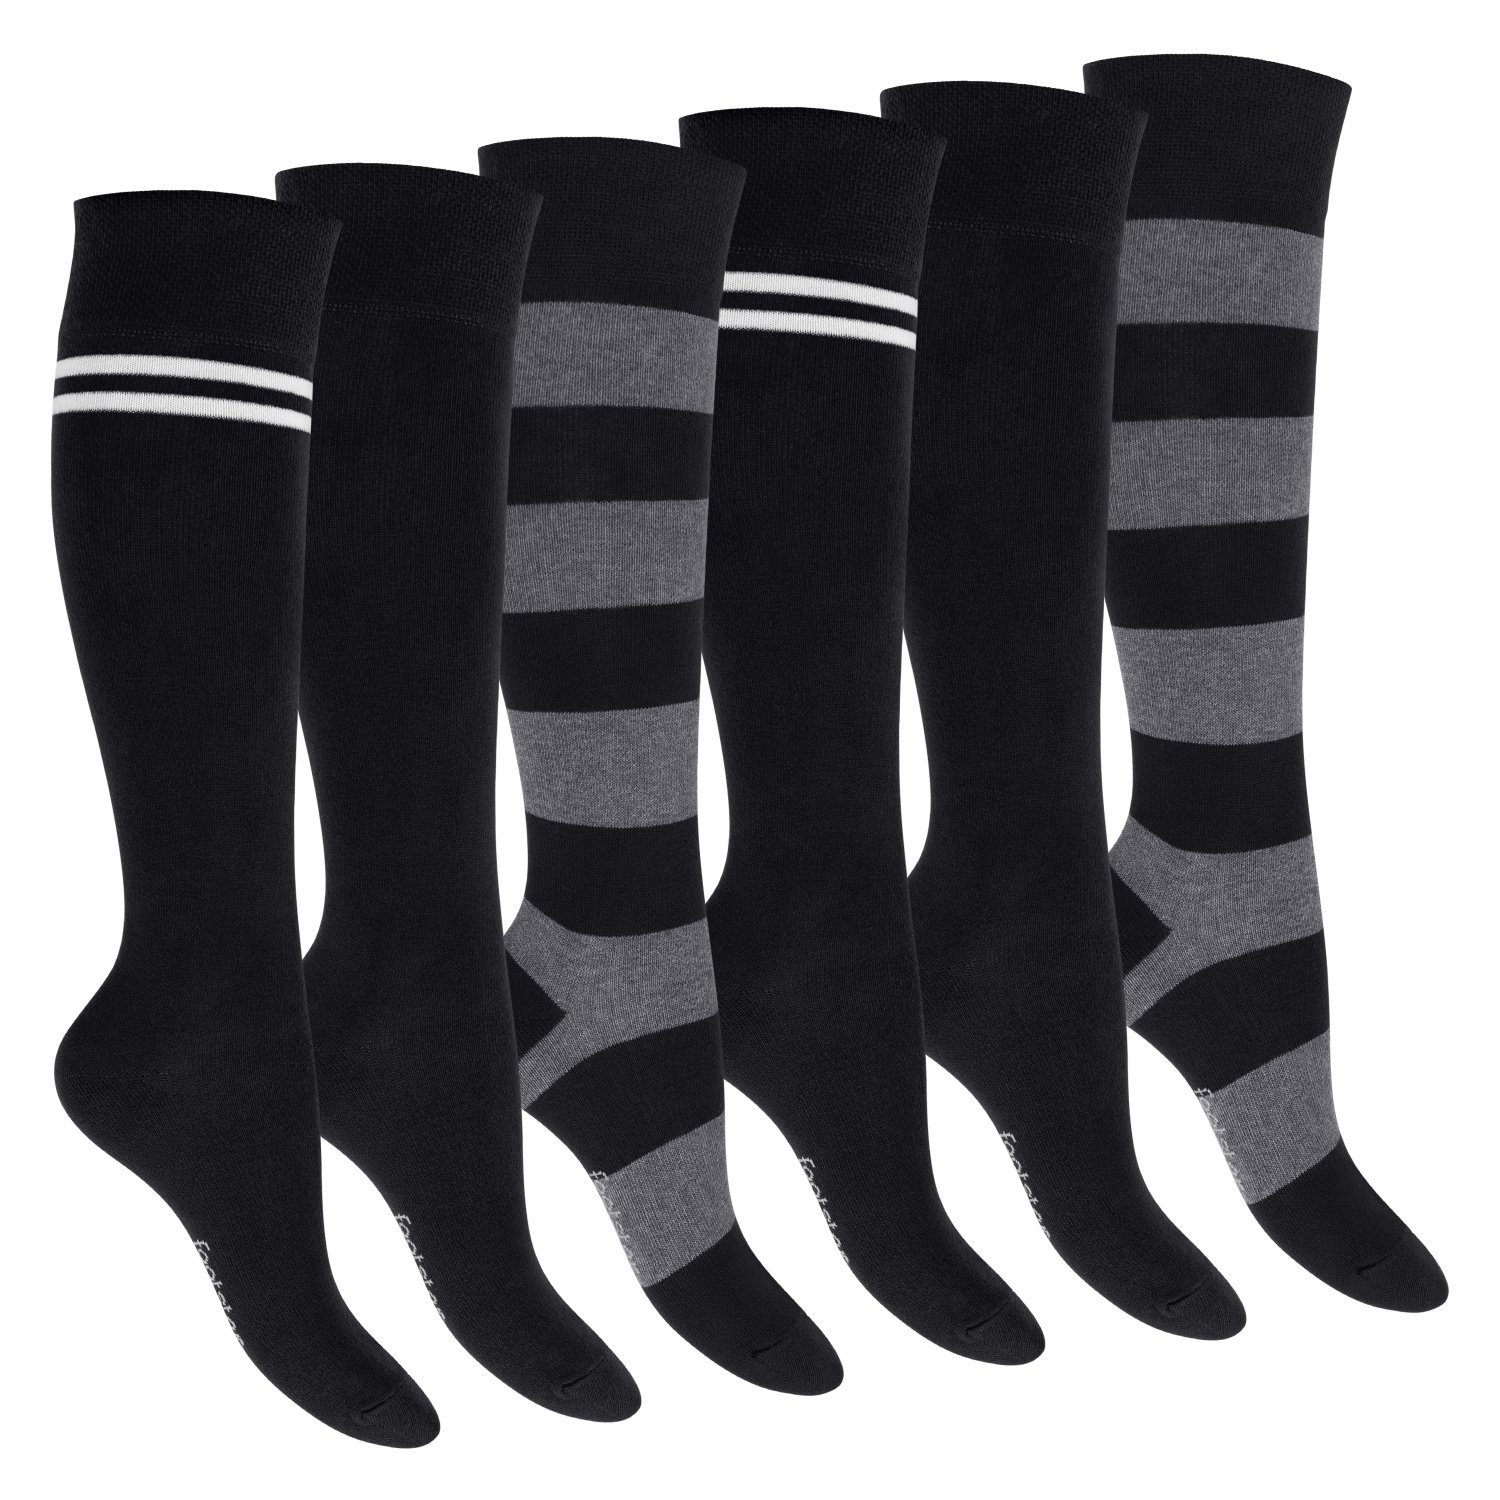 Footstar Langsocken Damen Kniestrümpfe geringelt (6 Paar) Schwarz | Socken